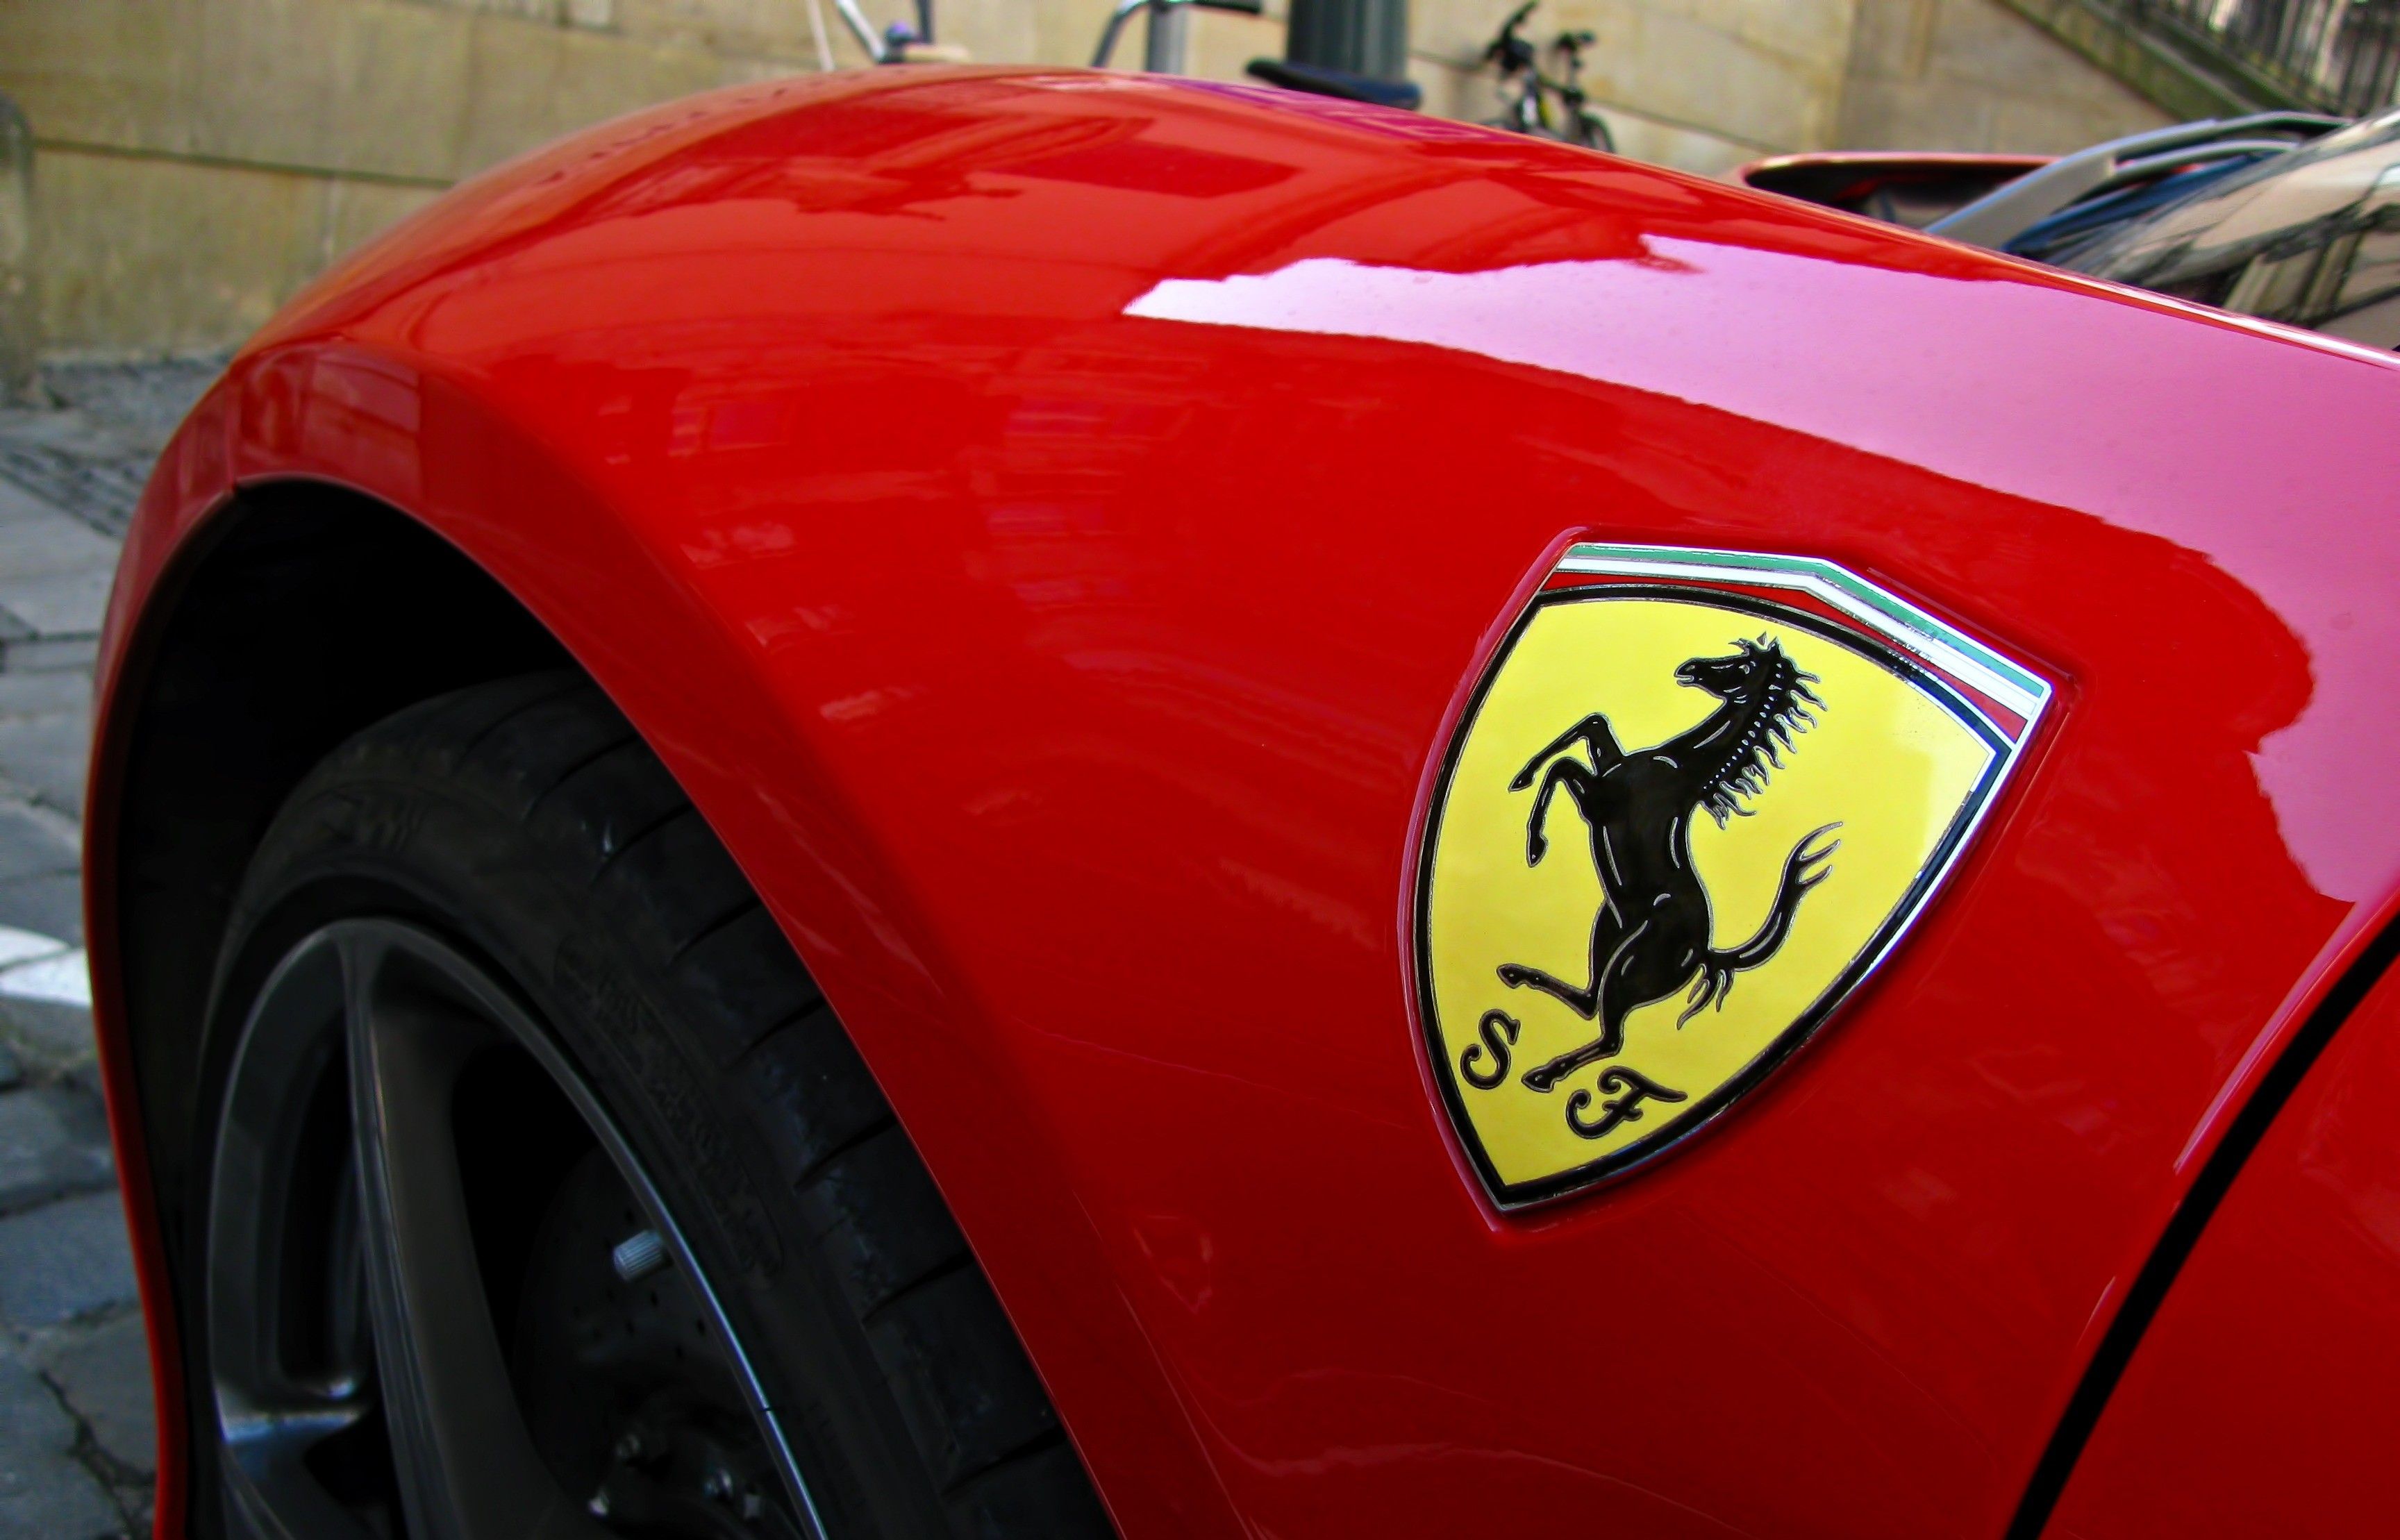 Ferrari Logo On Red Car